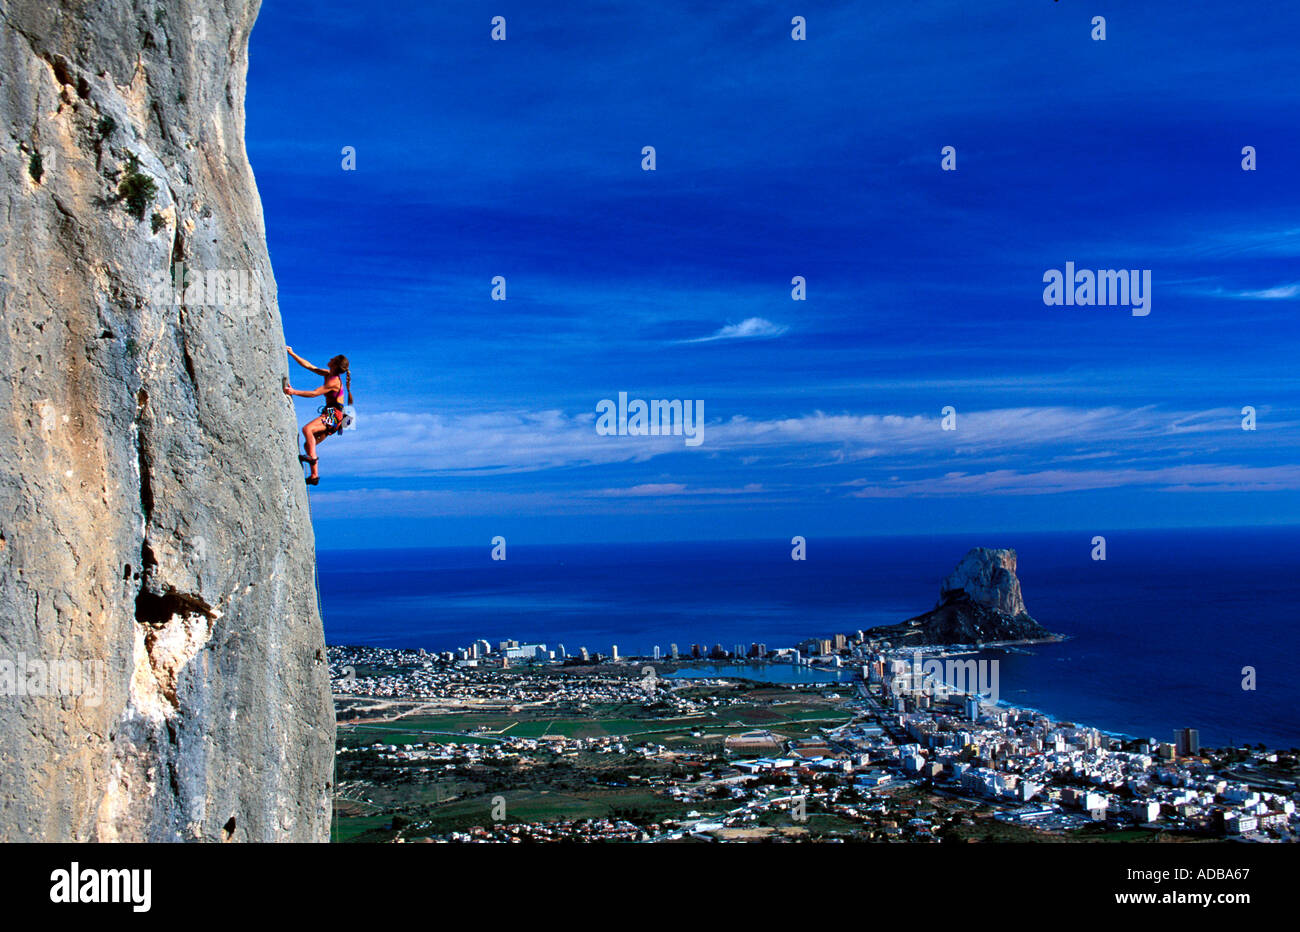 Emma Williams escalada Tai chi F6b Olta, Costa Blanca, España Fotografía de  stock - Alamy